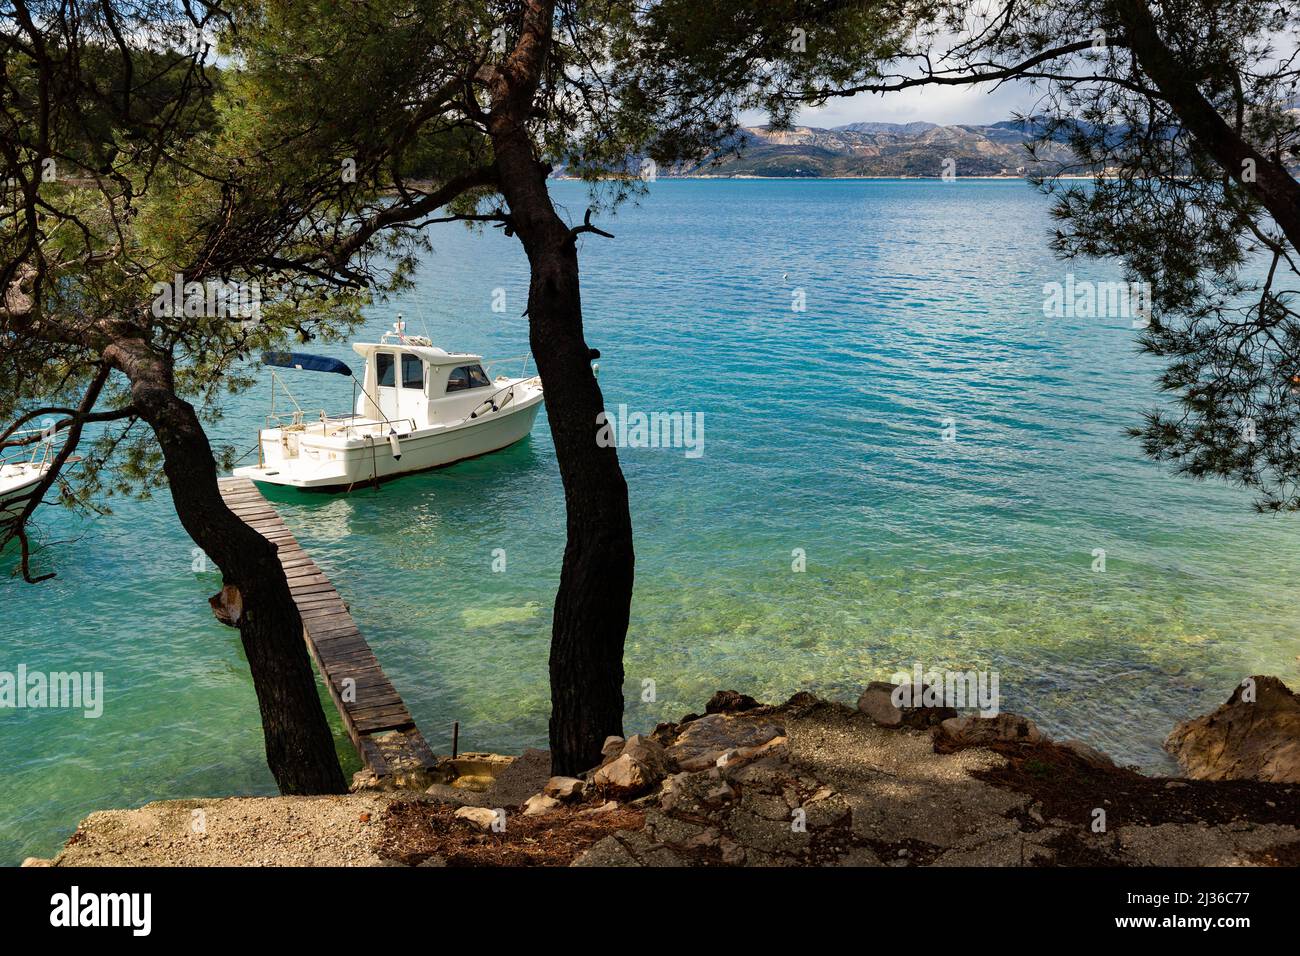 Boats in Adriatic sea near Dubrovnik. Croatia. Stock Photo